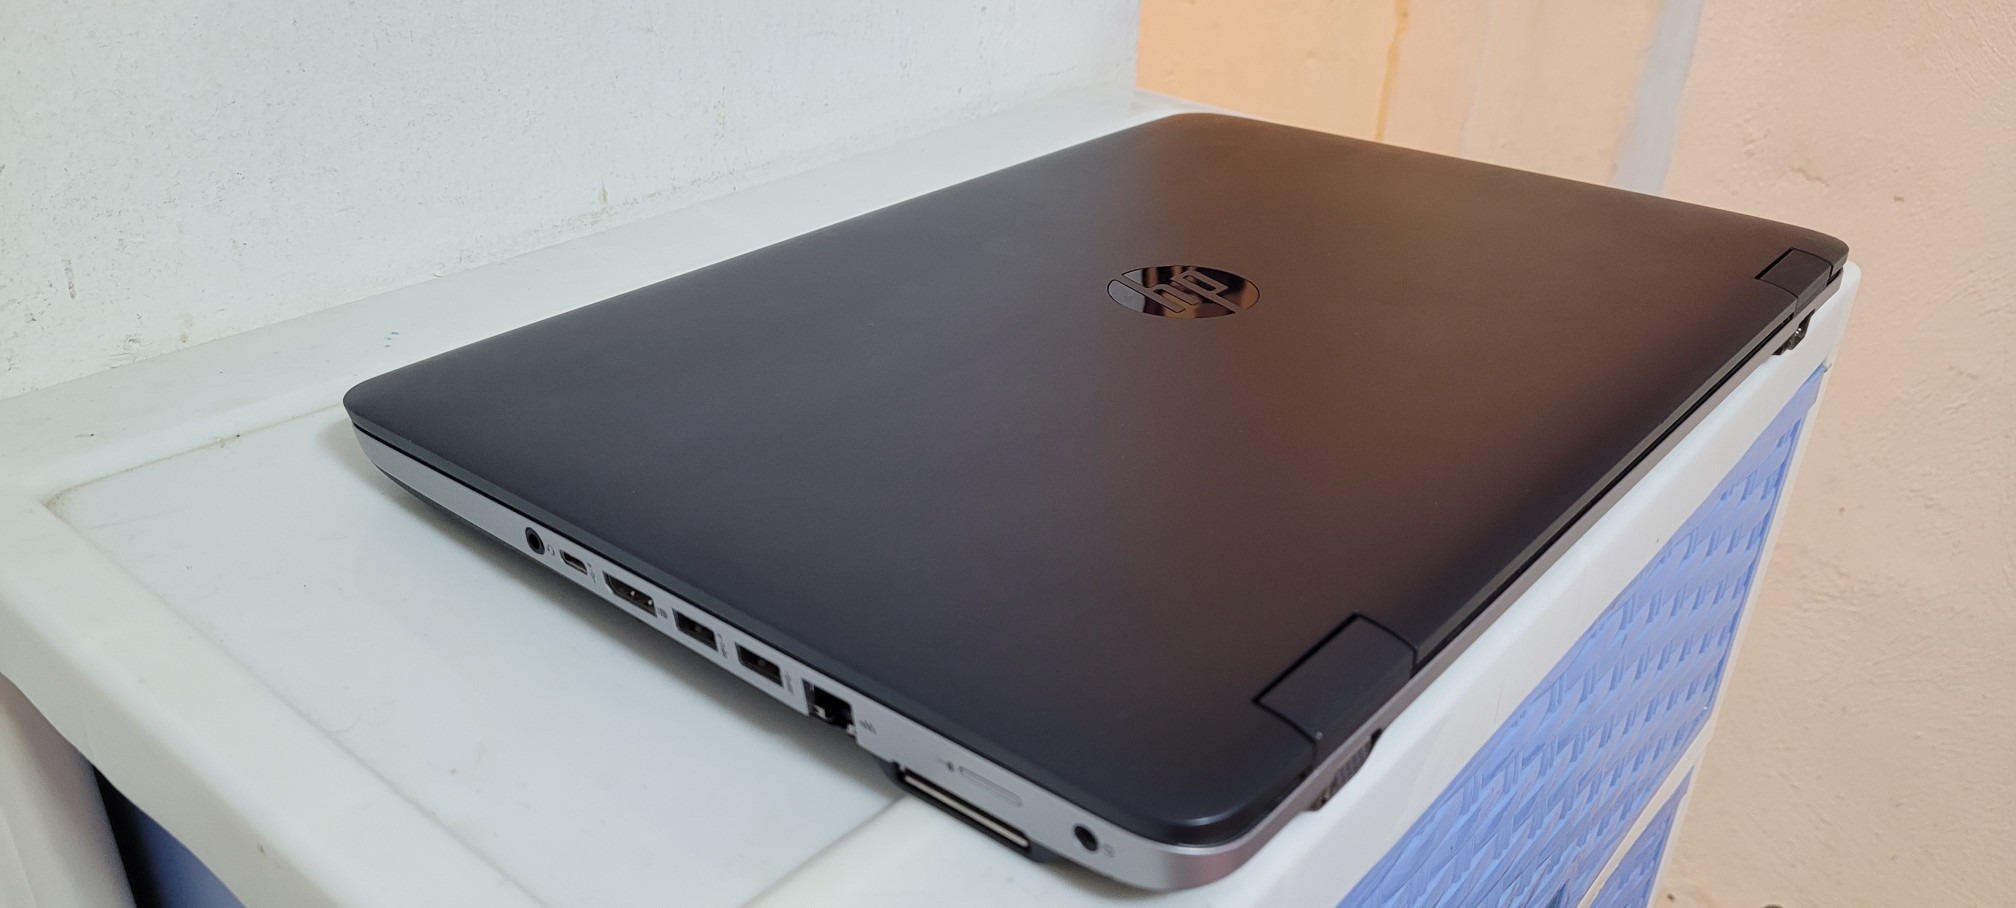 computadoras y laptops - Laptop hp G2 17 Pulg Core i5 6ta Ram 8gb ddr4 Disco 256gb Full 1080p 2